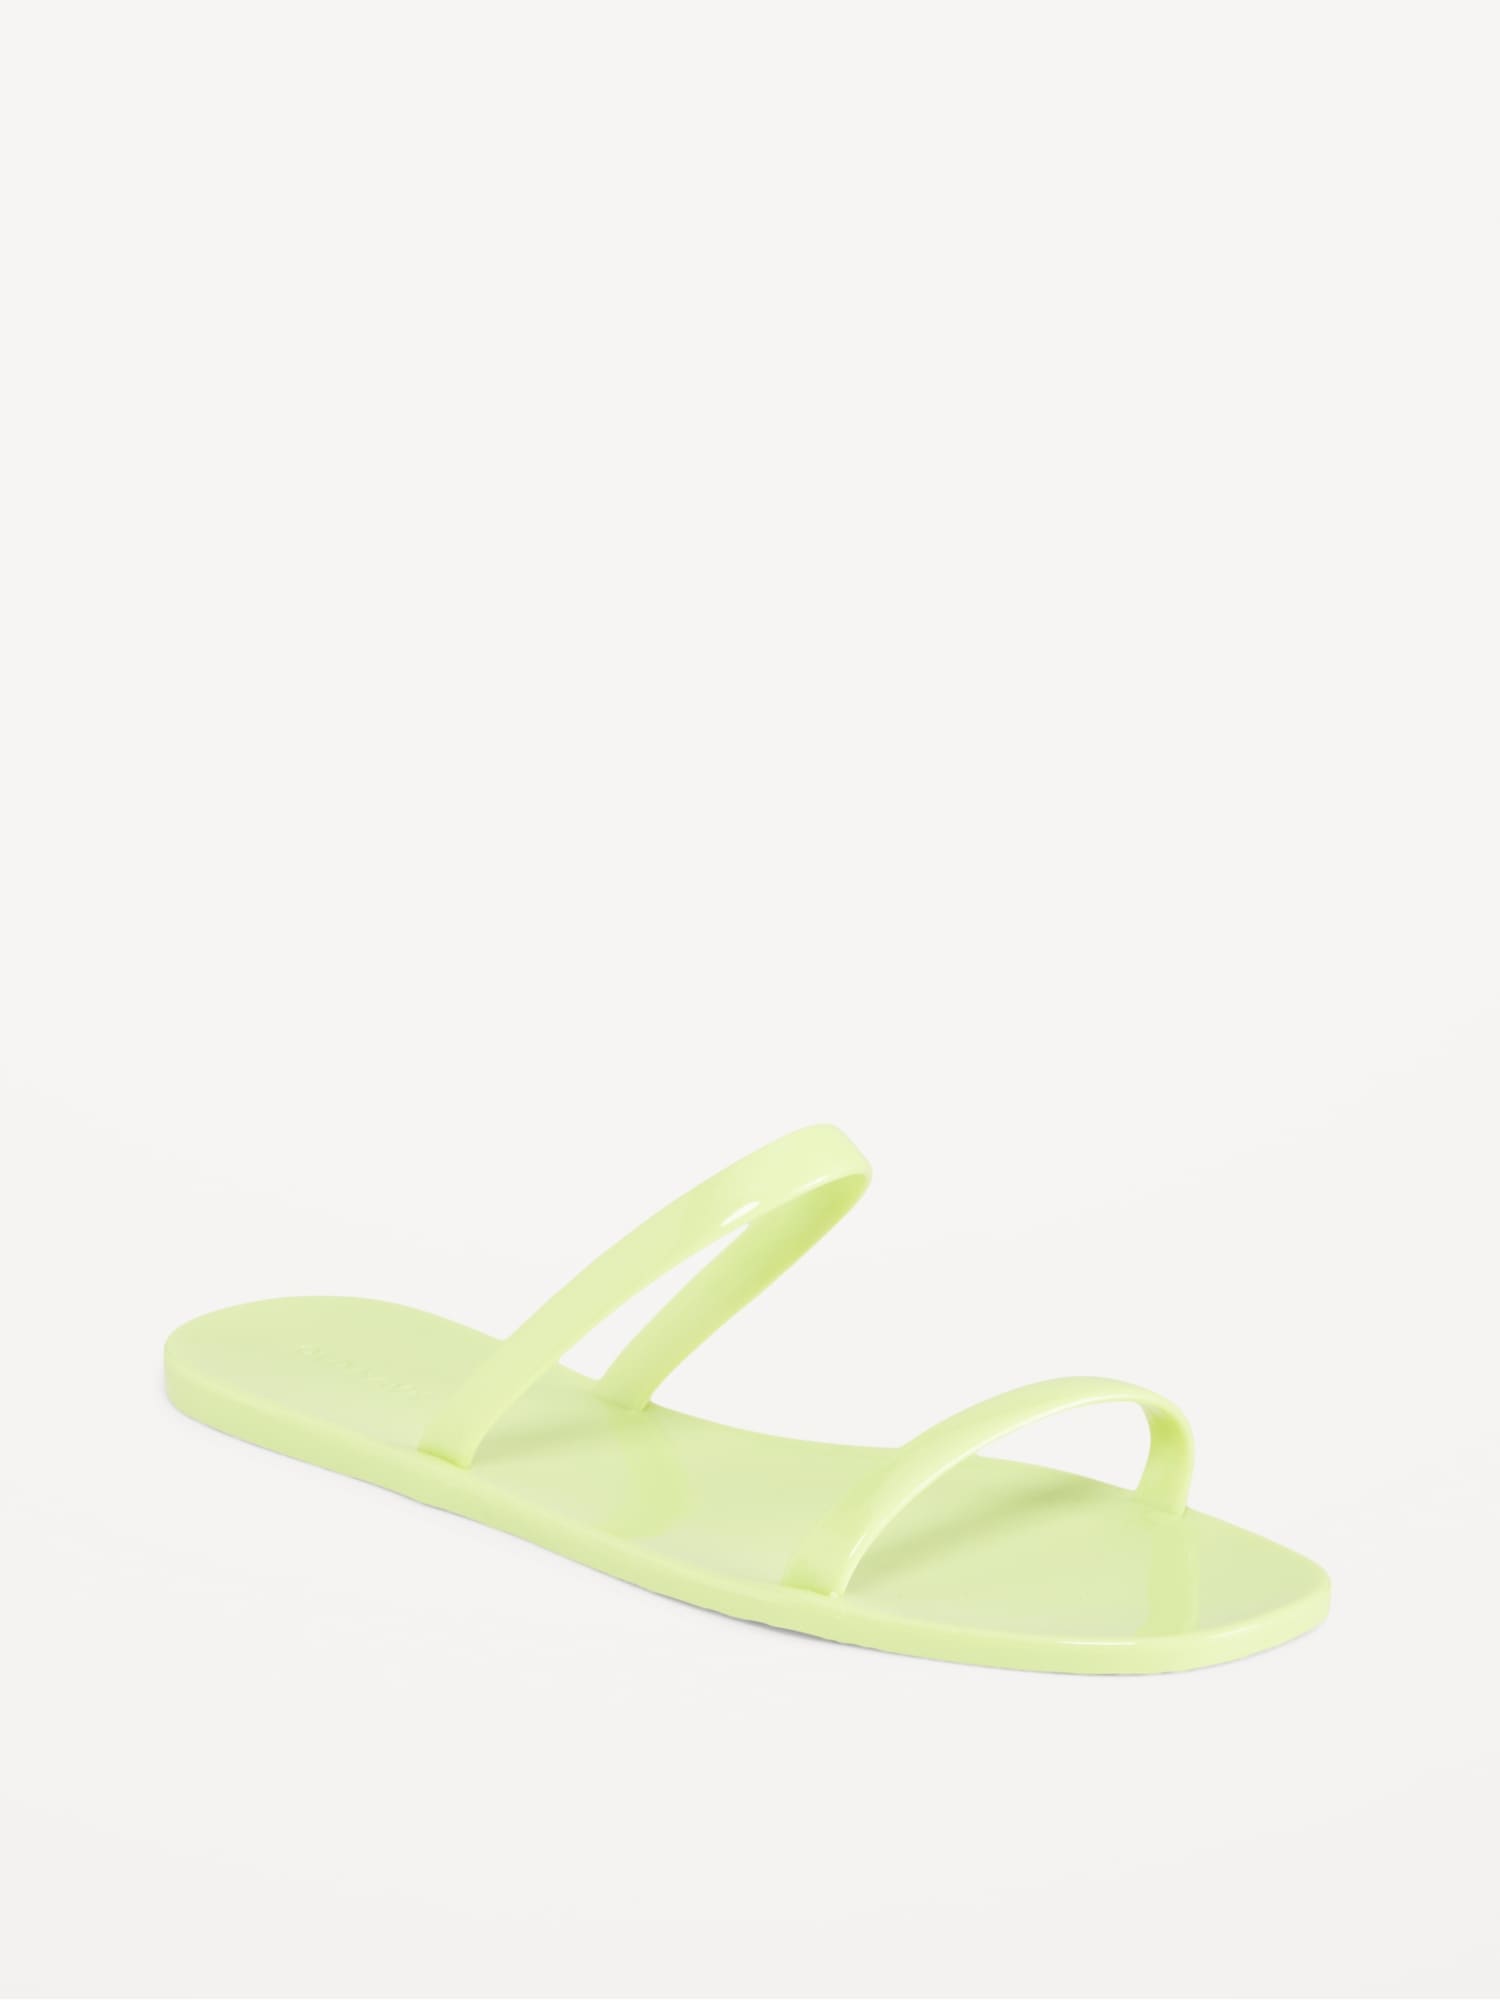 Shiny-Jelly Slide Sandals | Old Navy